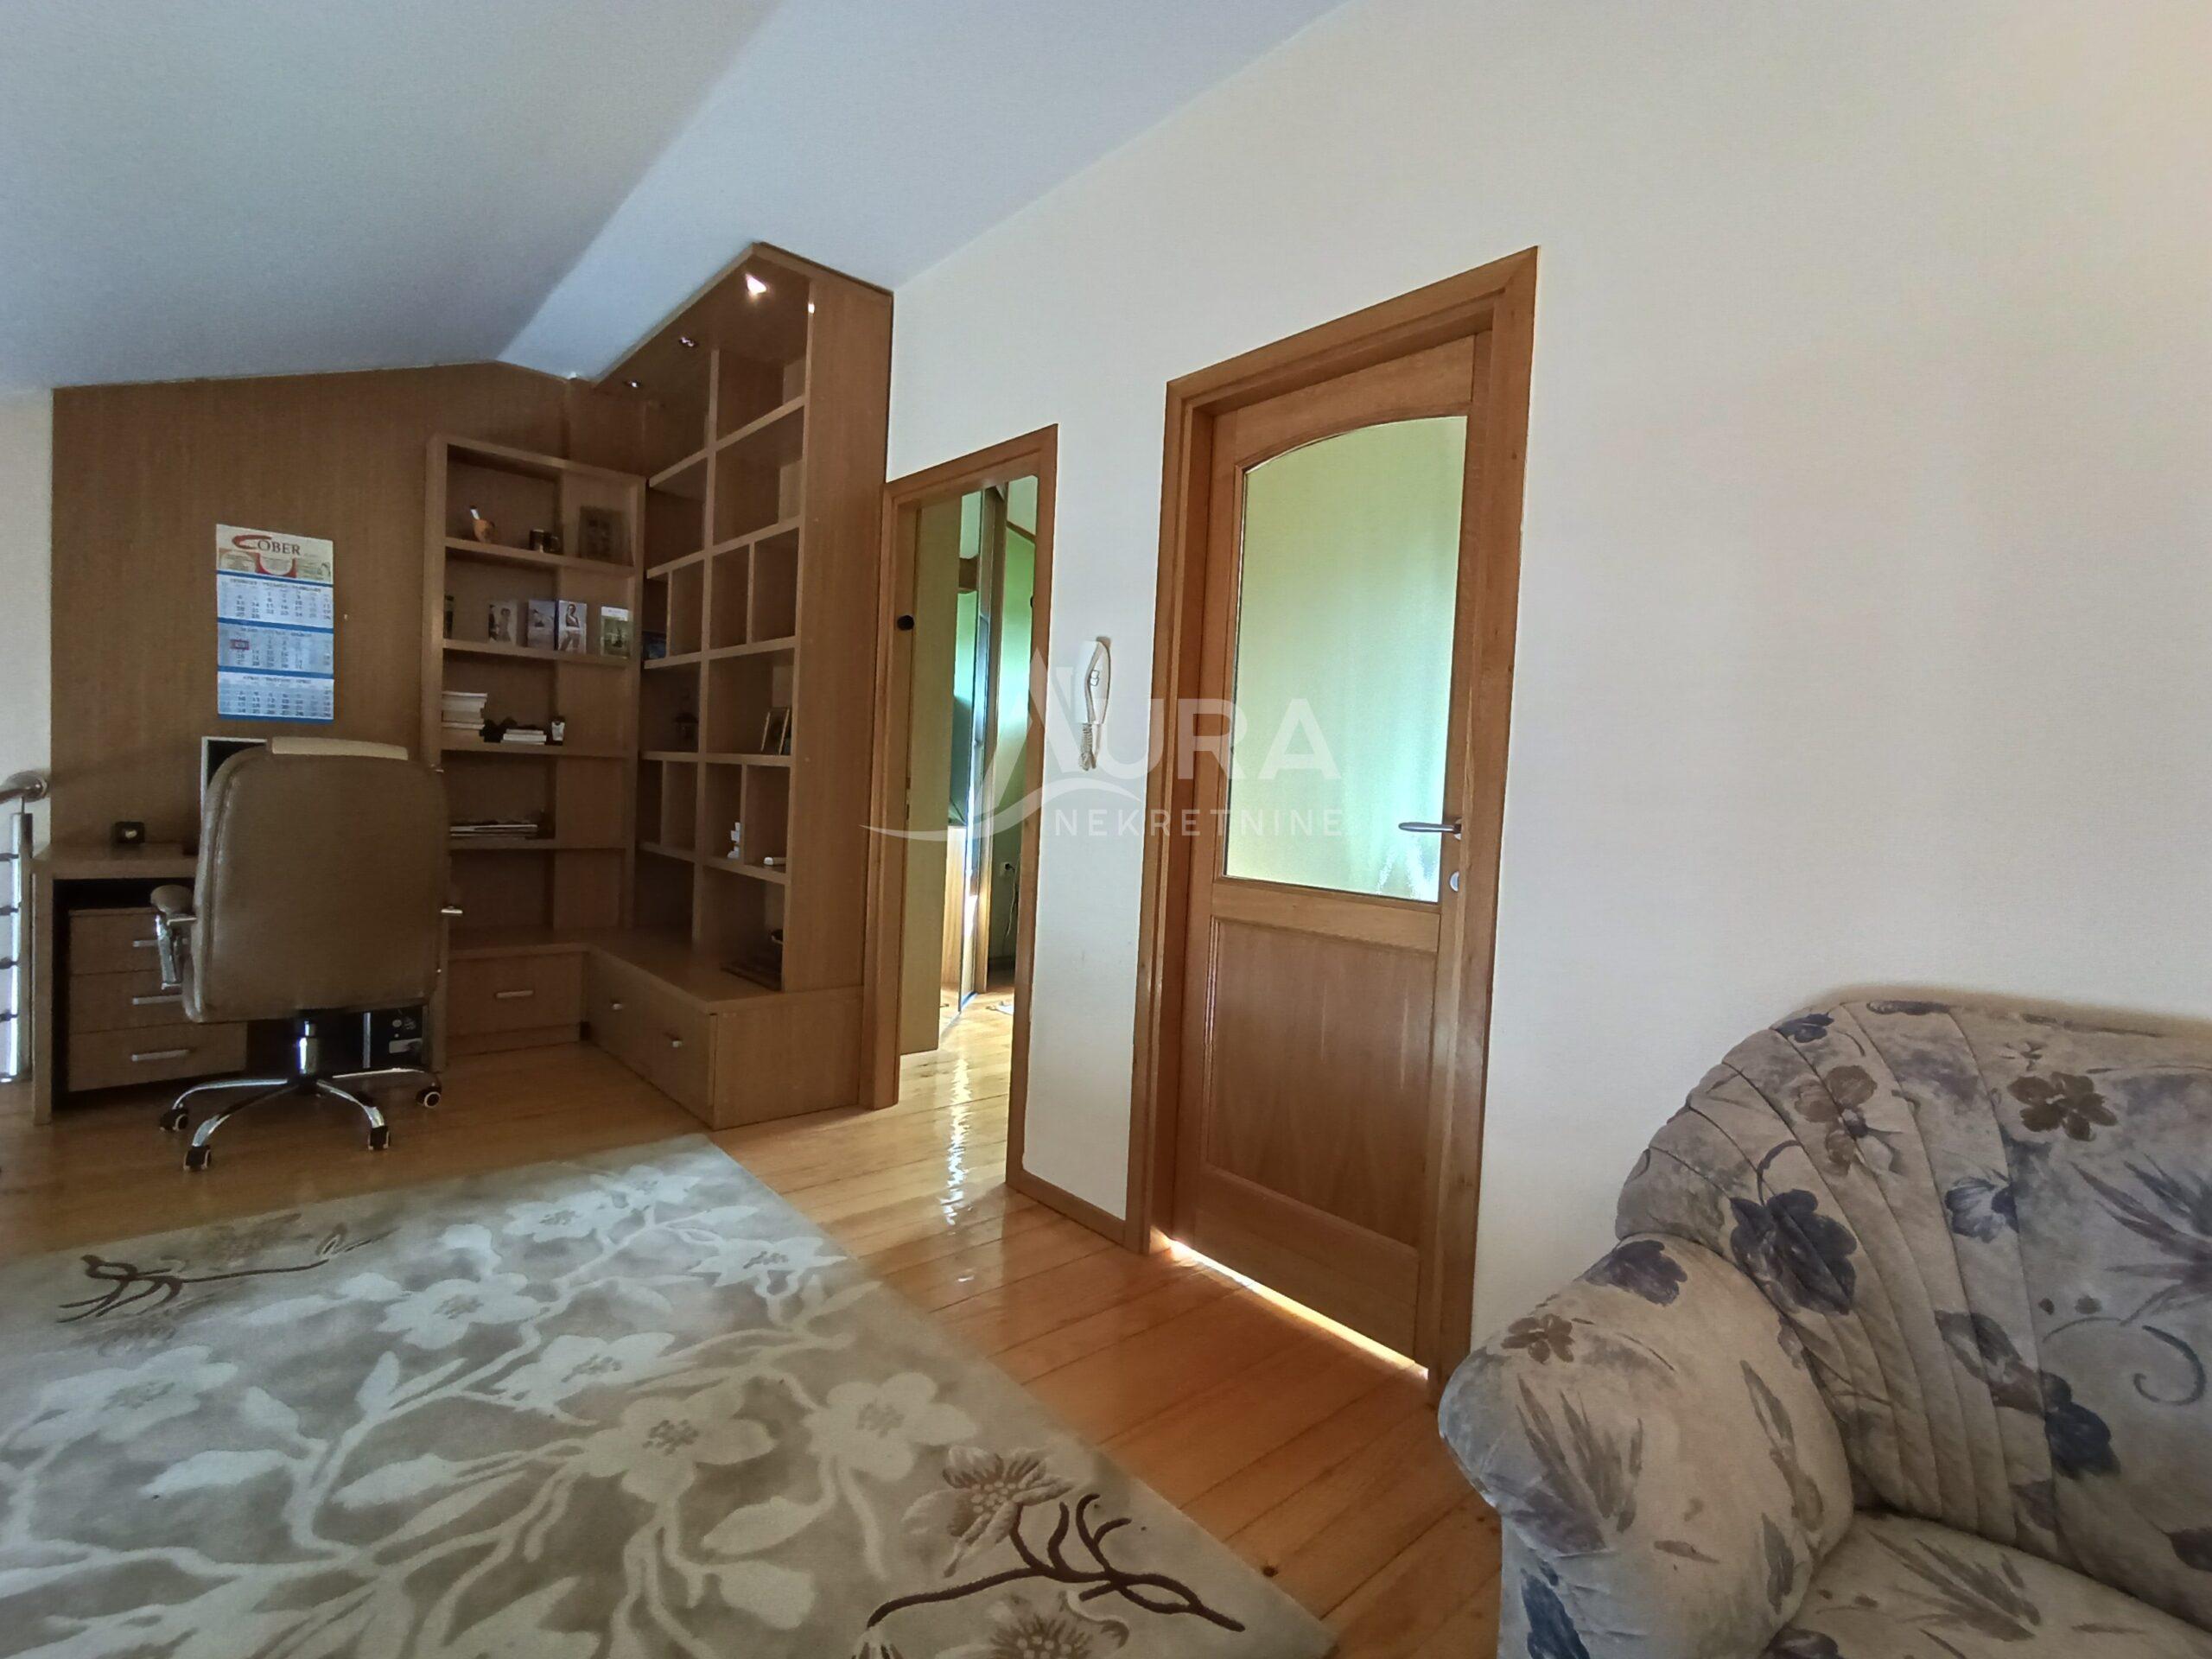 Flat for rent / Stan / 4S / Sarajevo, Centar